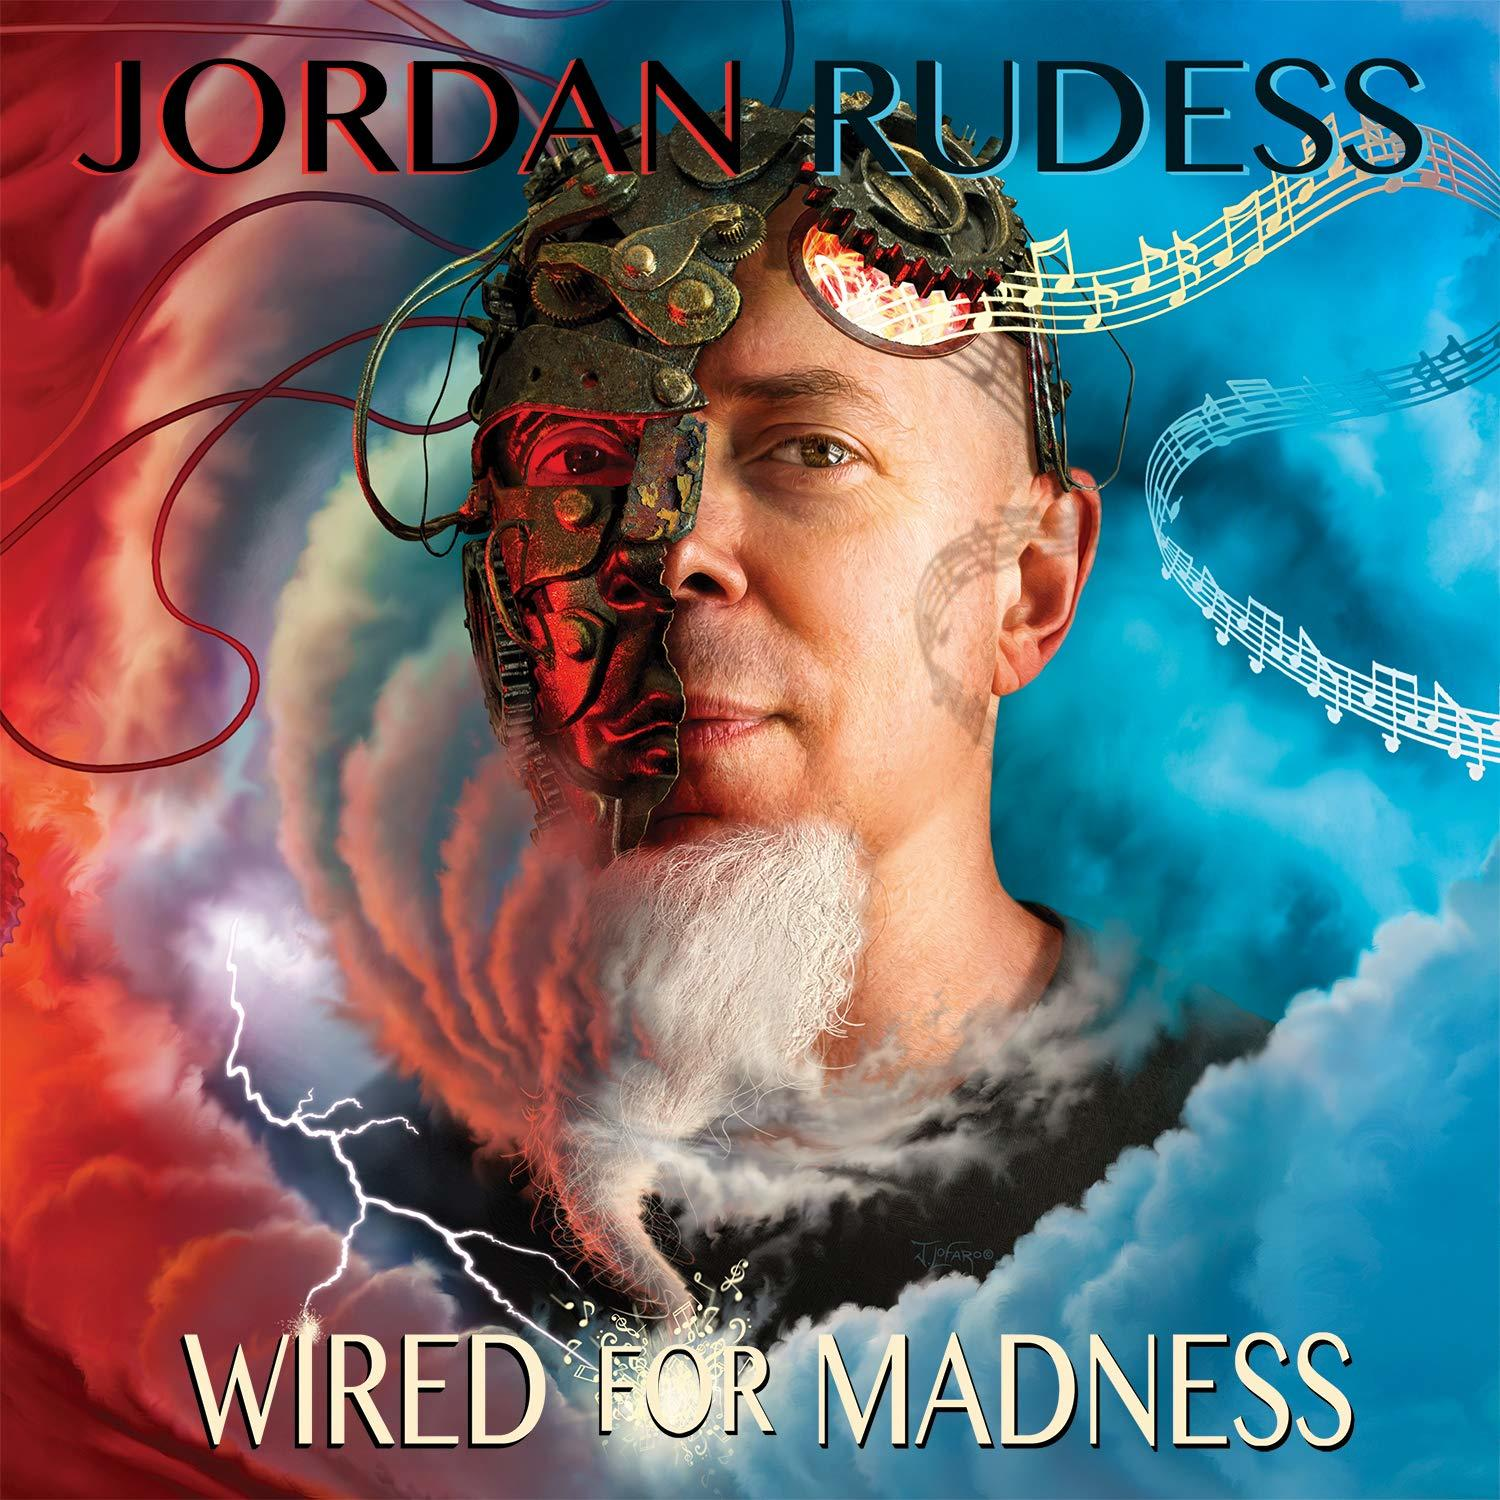 Jordan Gatefold+MP3) Madness For Rudess (Vinyl) (2LP Wired - -